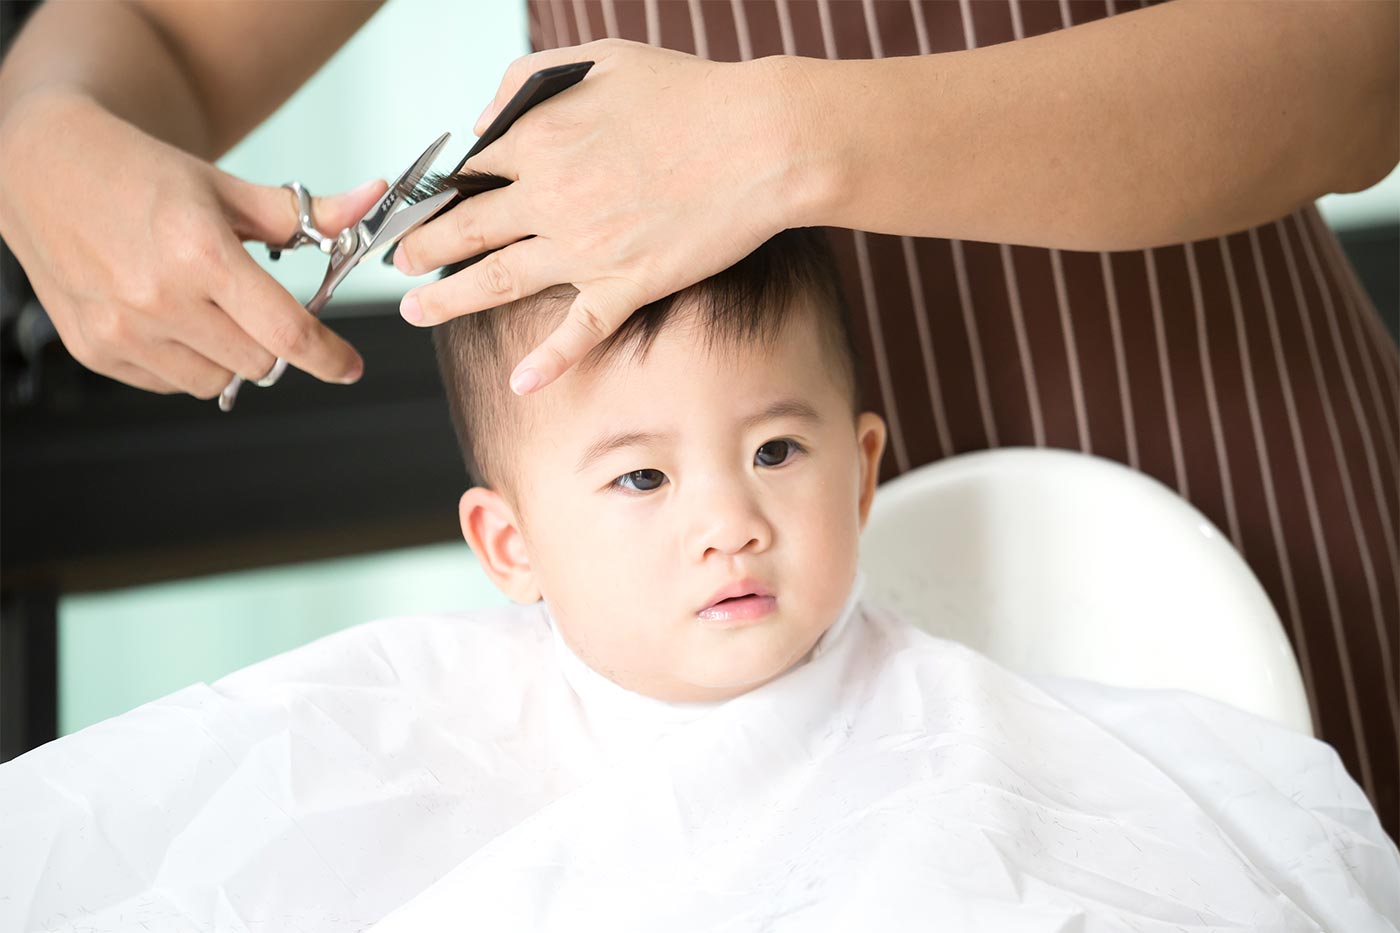 Child's First Haircut at a Salon